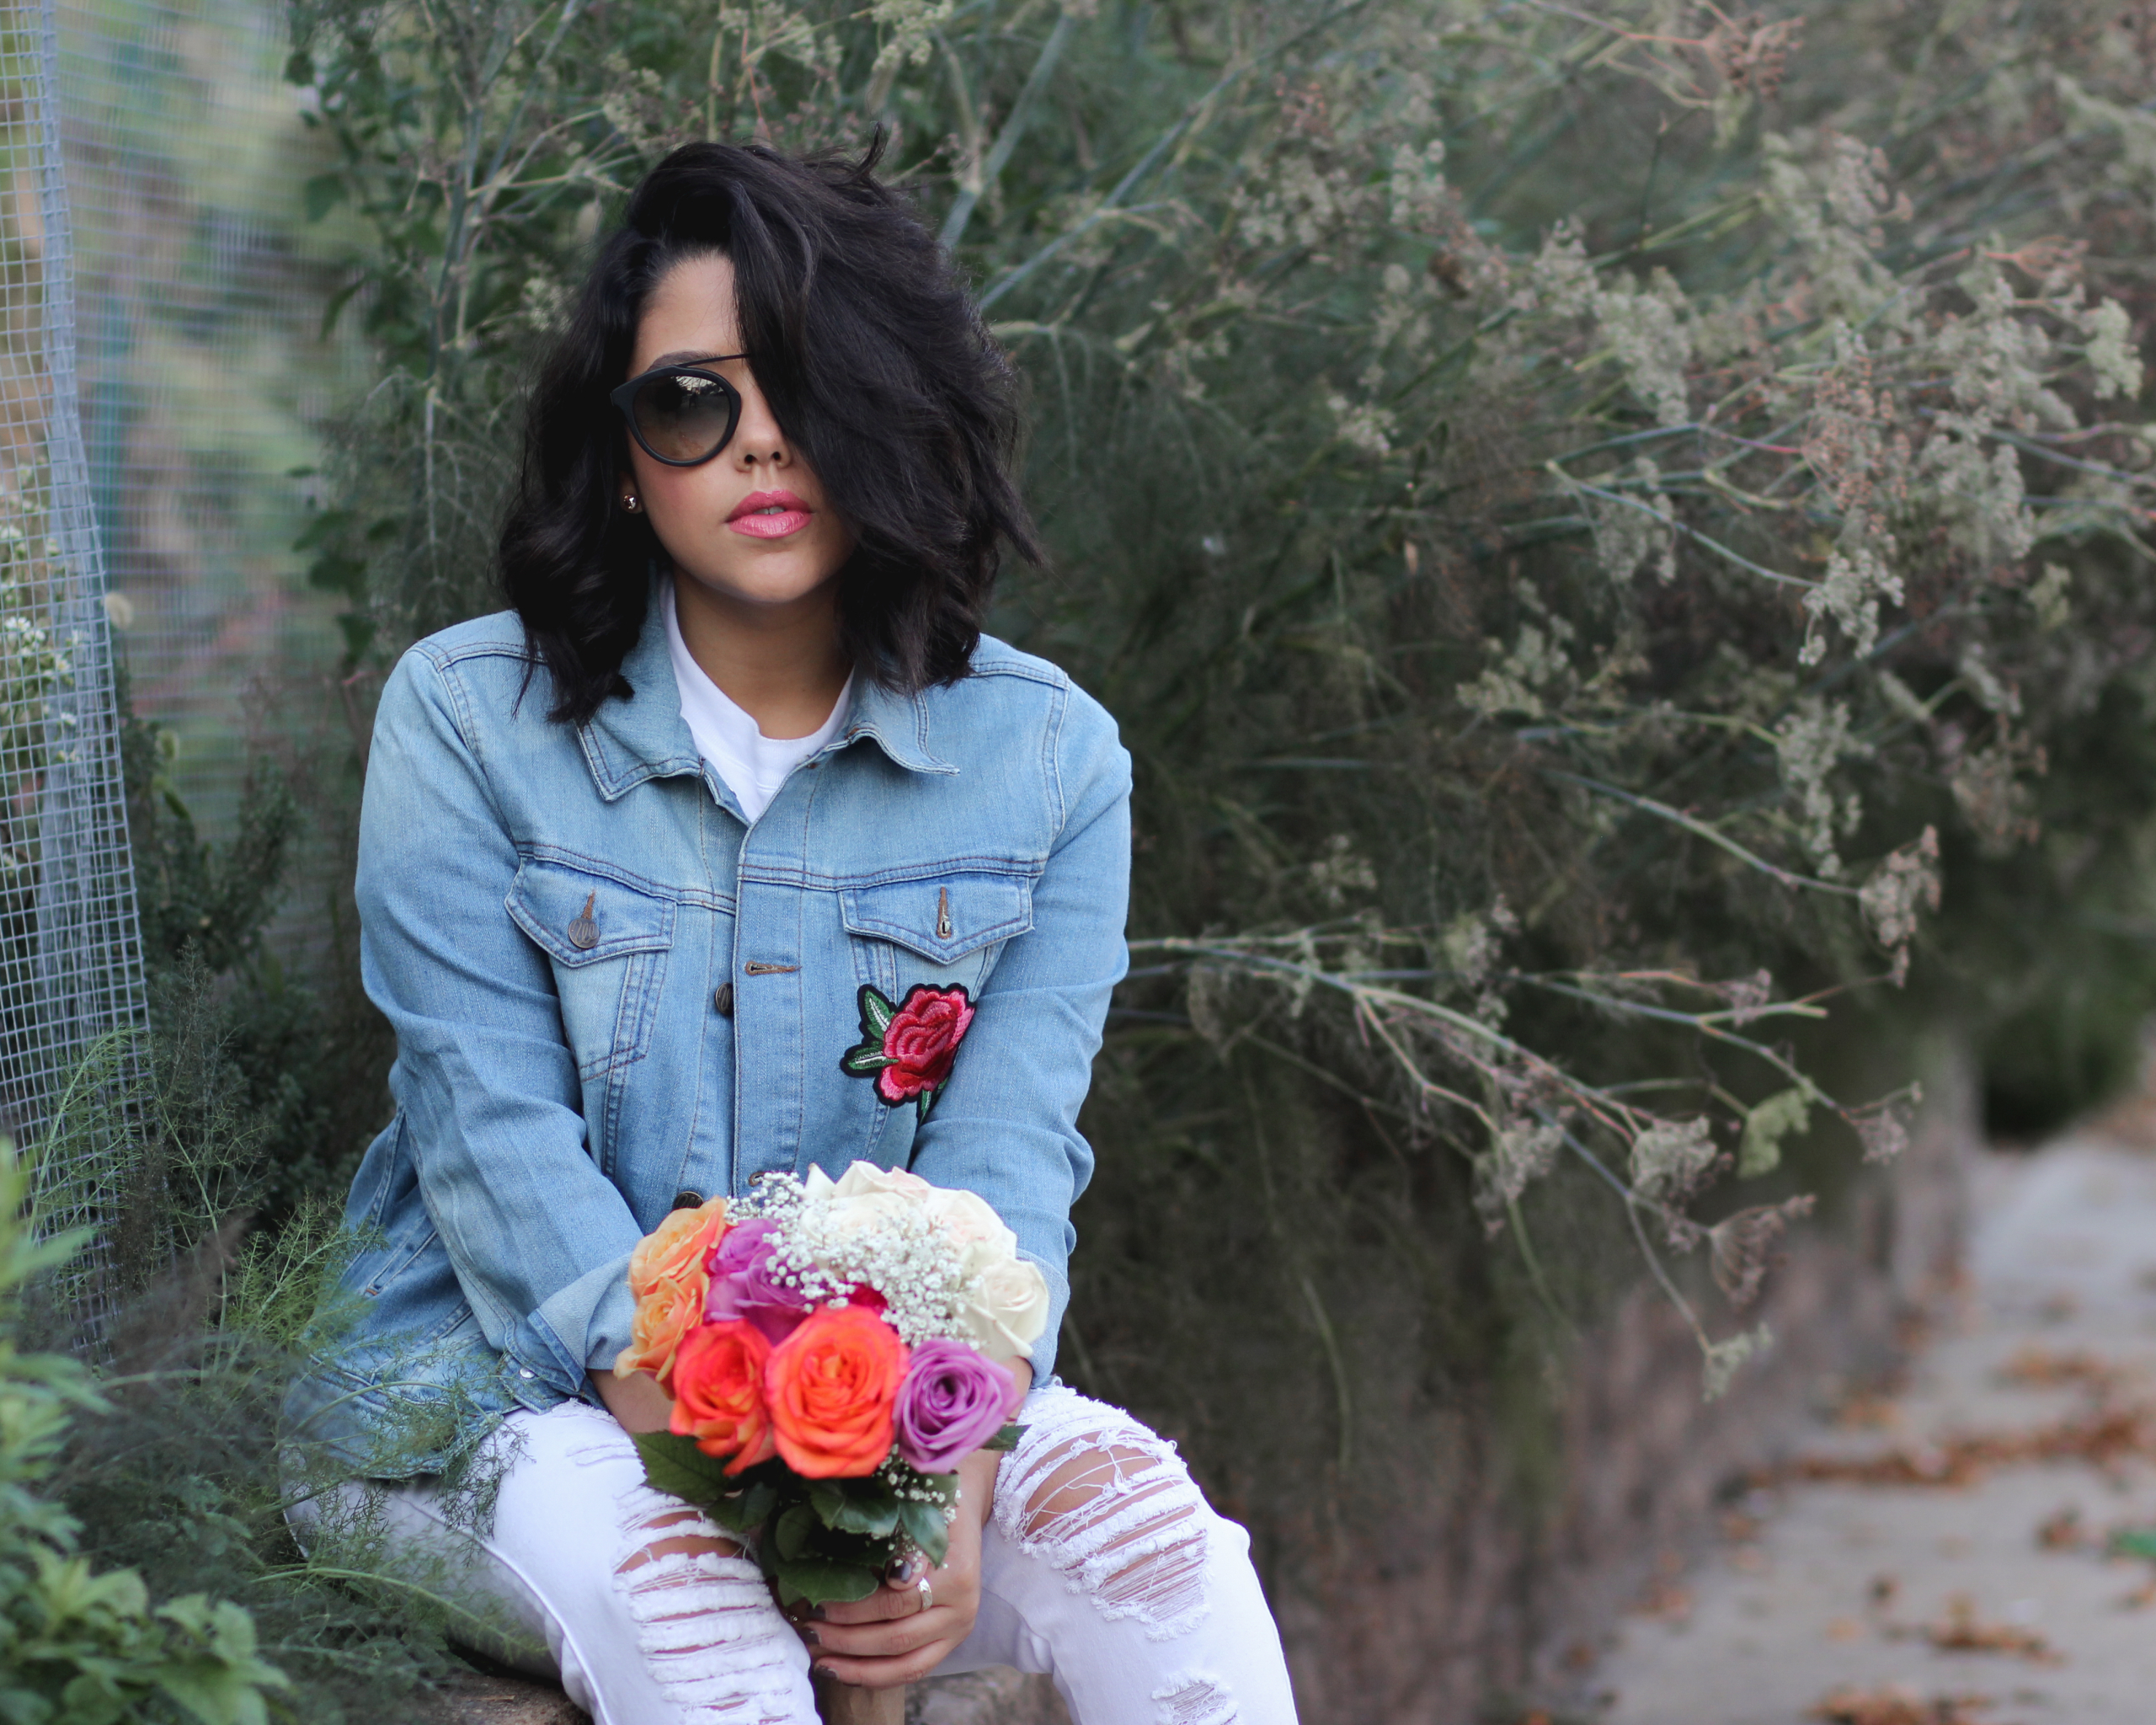 lifestyle blogger naty michele sitting down holding roses wearing a denim jacket